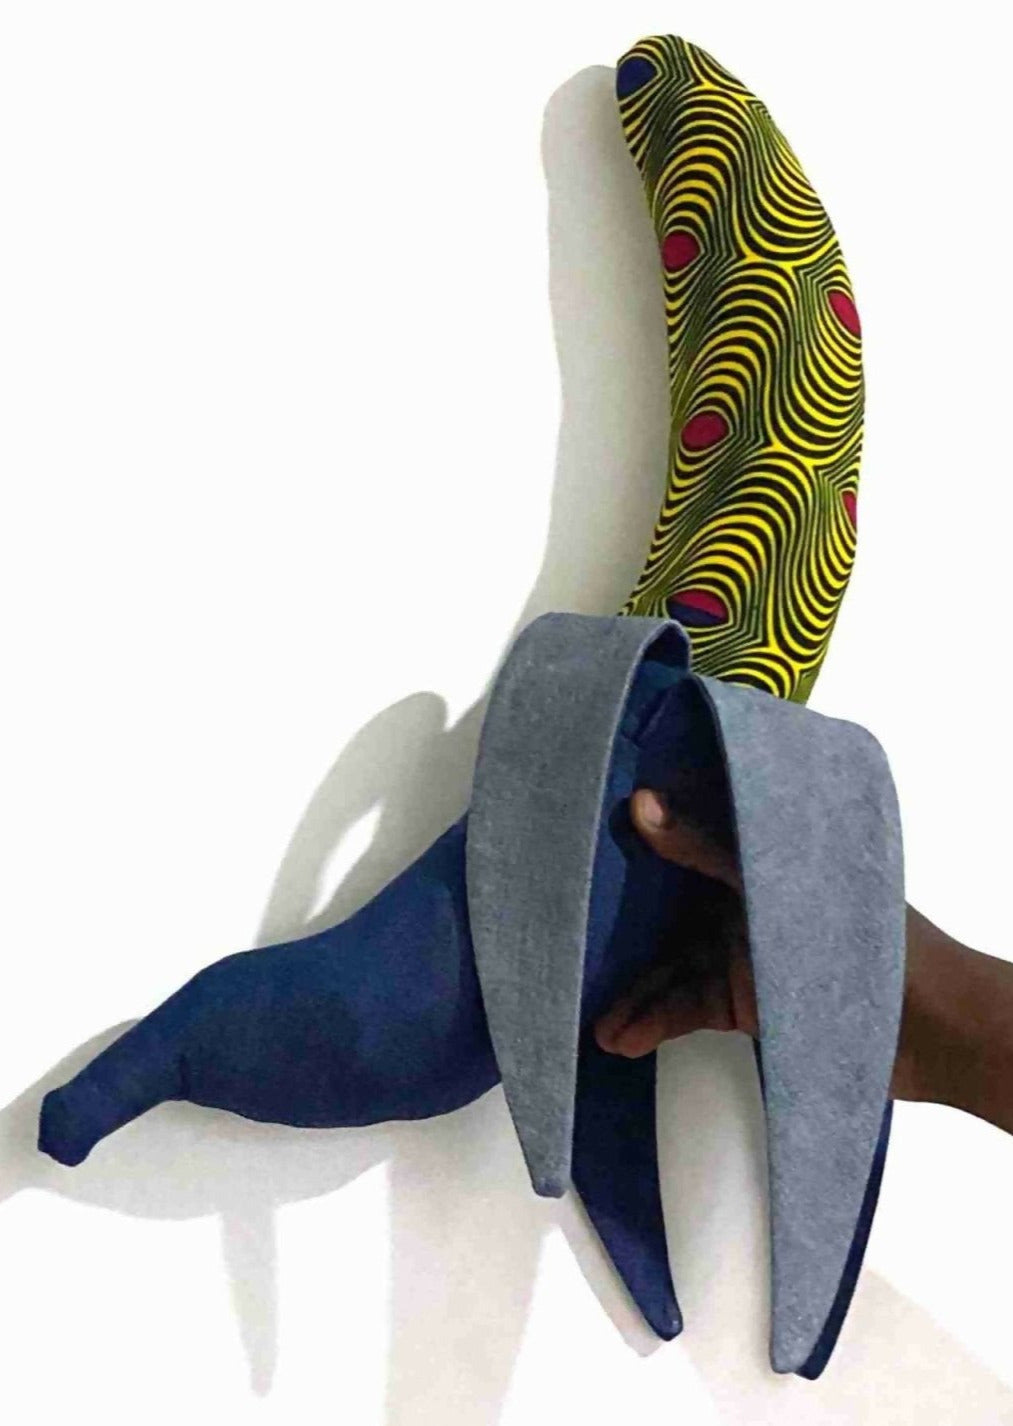 Spielzeug-Puppe BANANE - mikono.africa Jacken aus Kenia bunte Bomberjacke Partyjacke faire sozial nachhaltig designed in Kenia